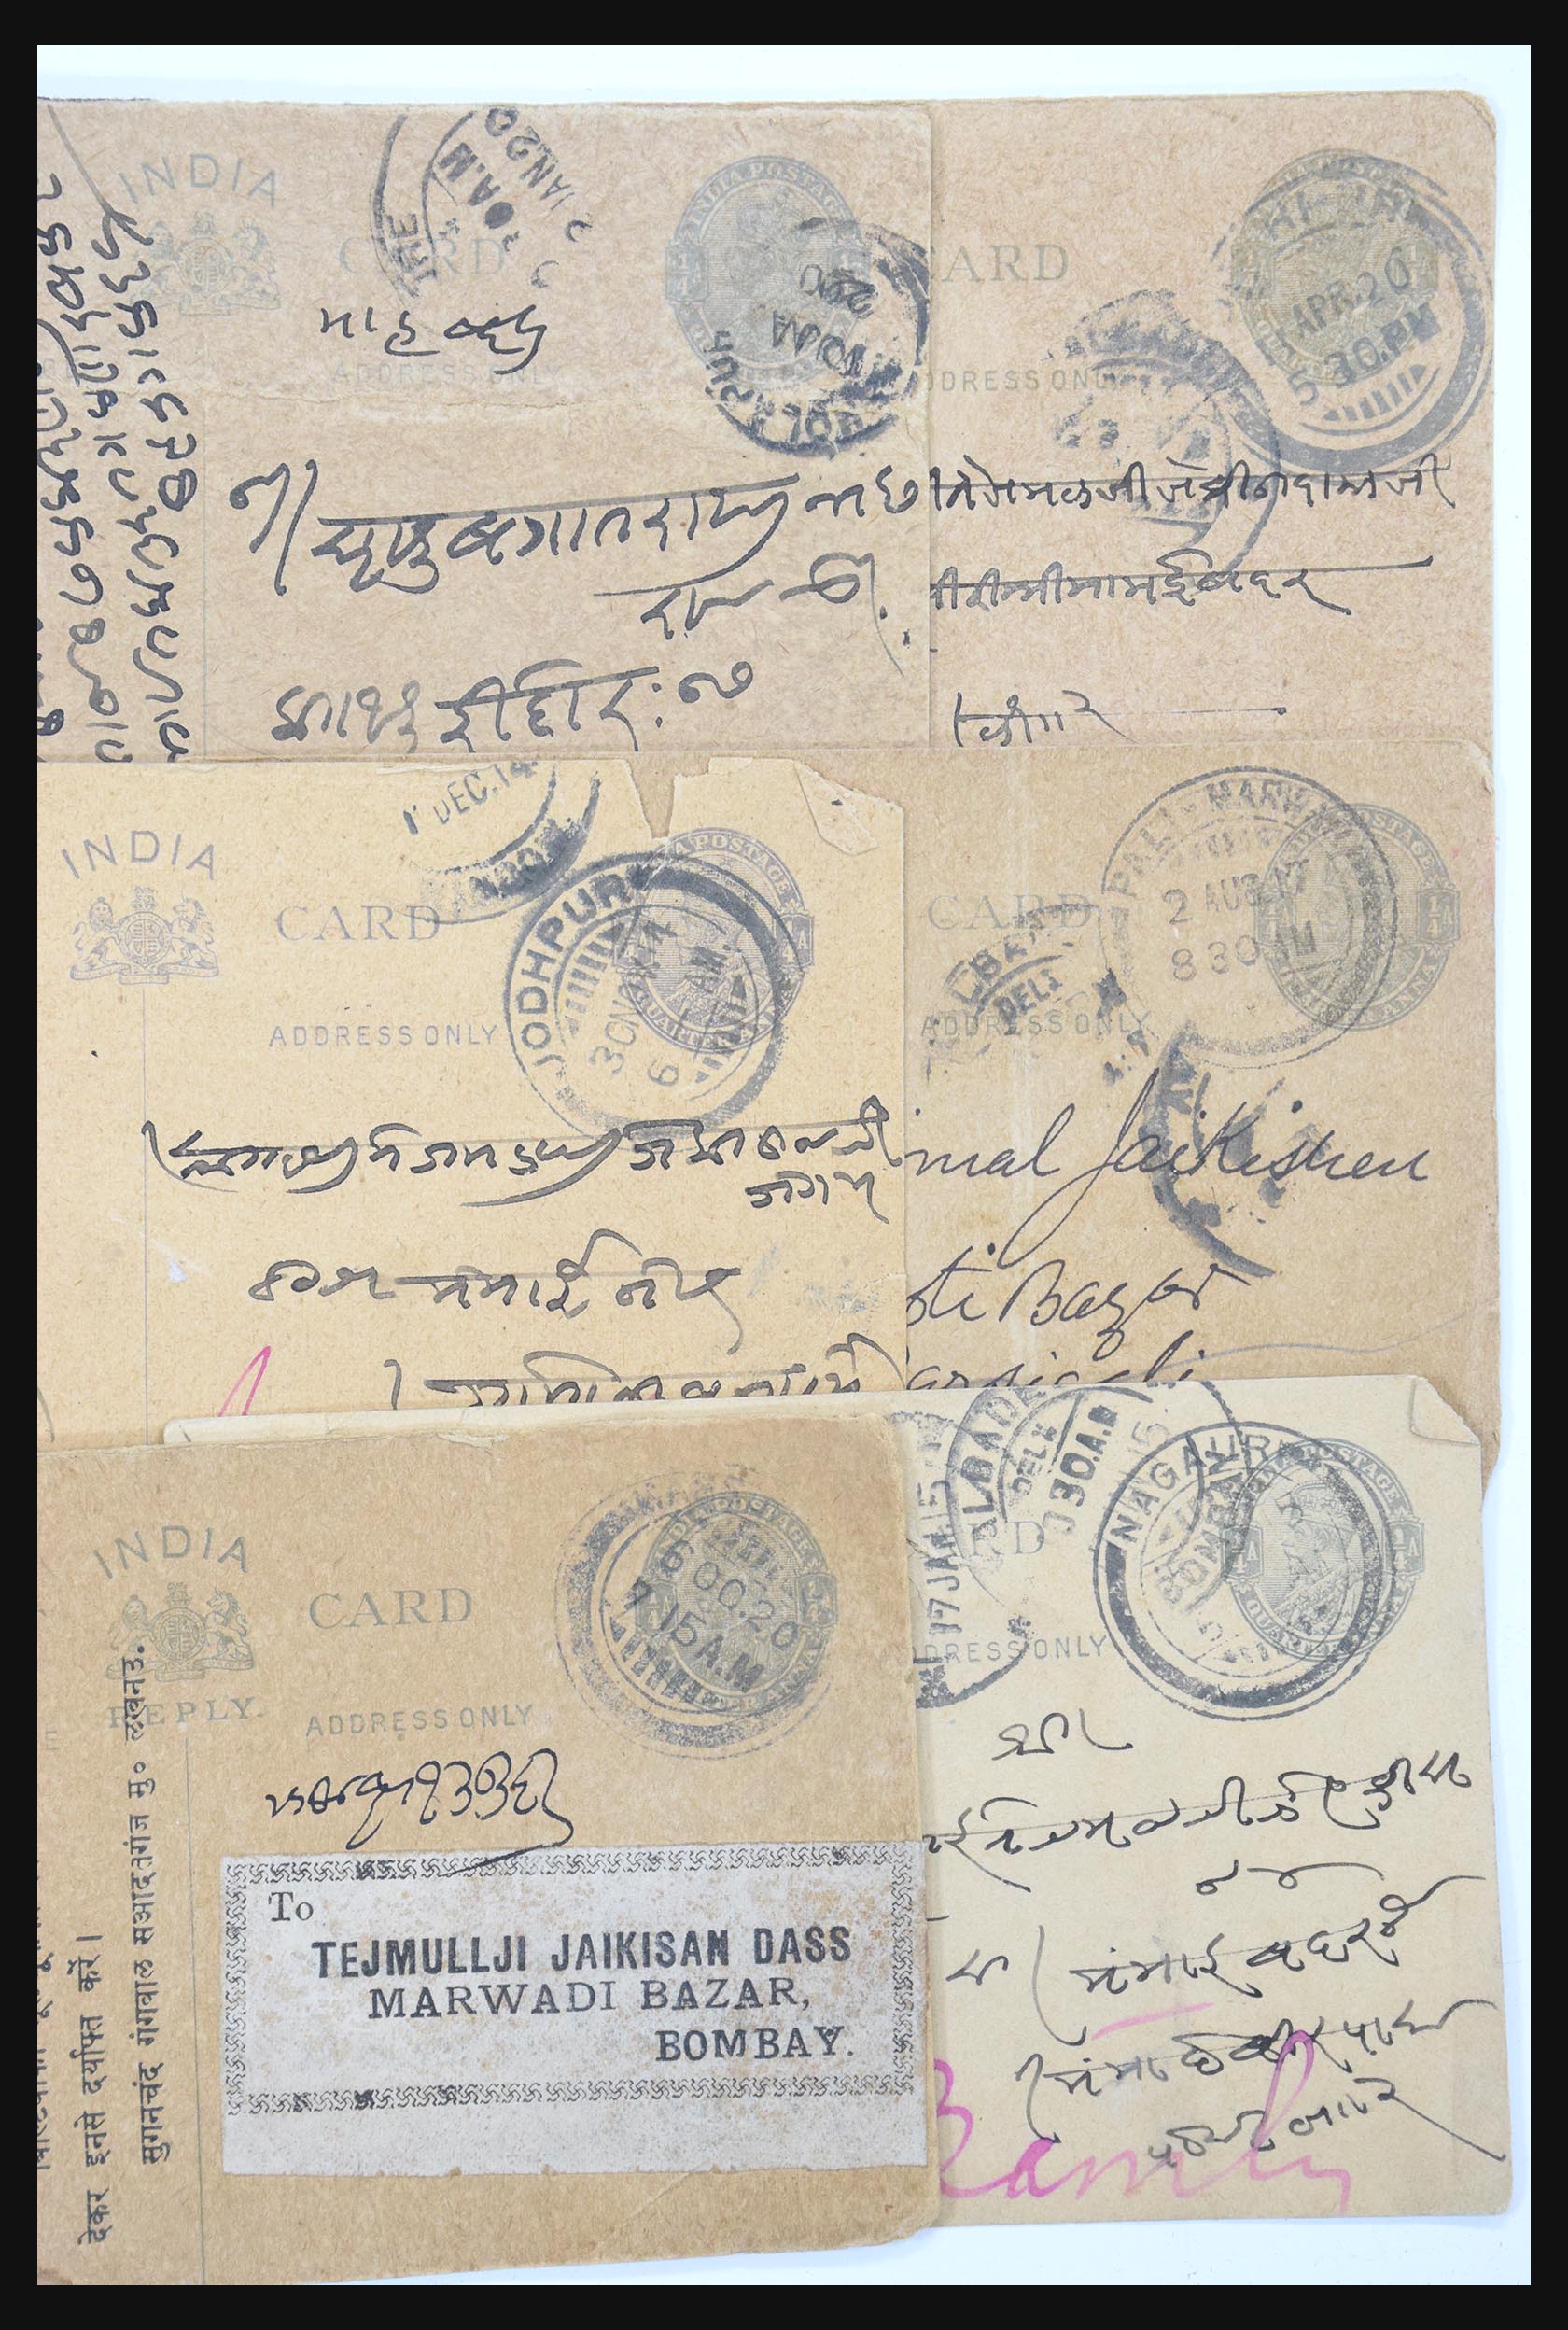 30686 035 - 30686 India en staten brieven 1900-1945.